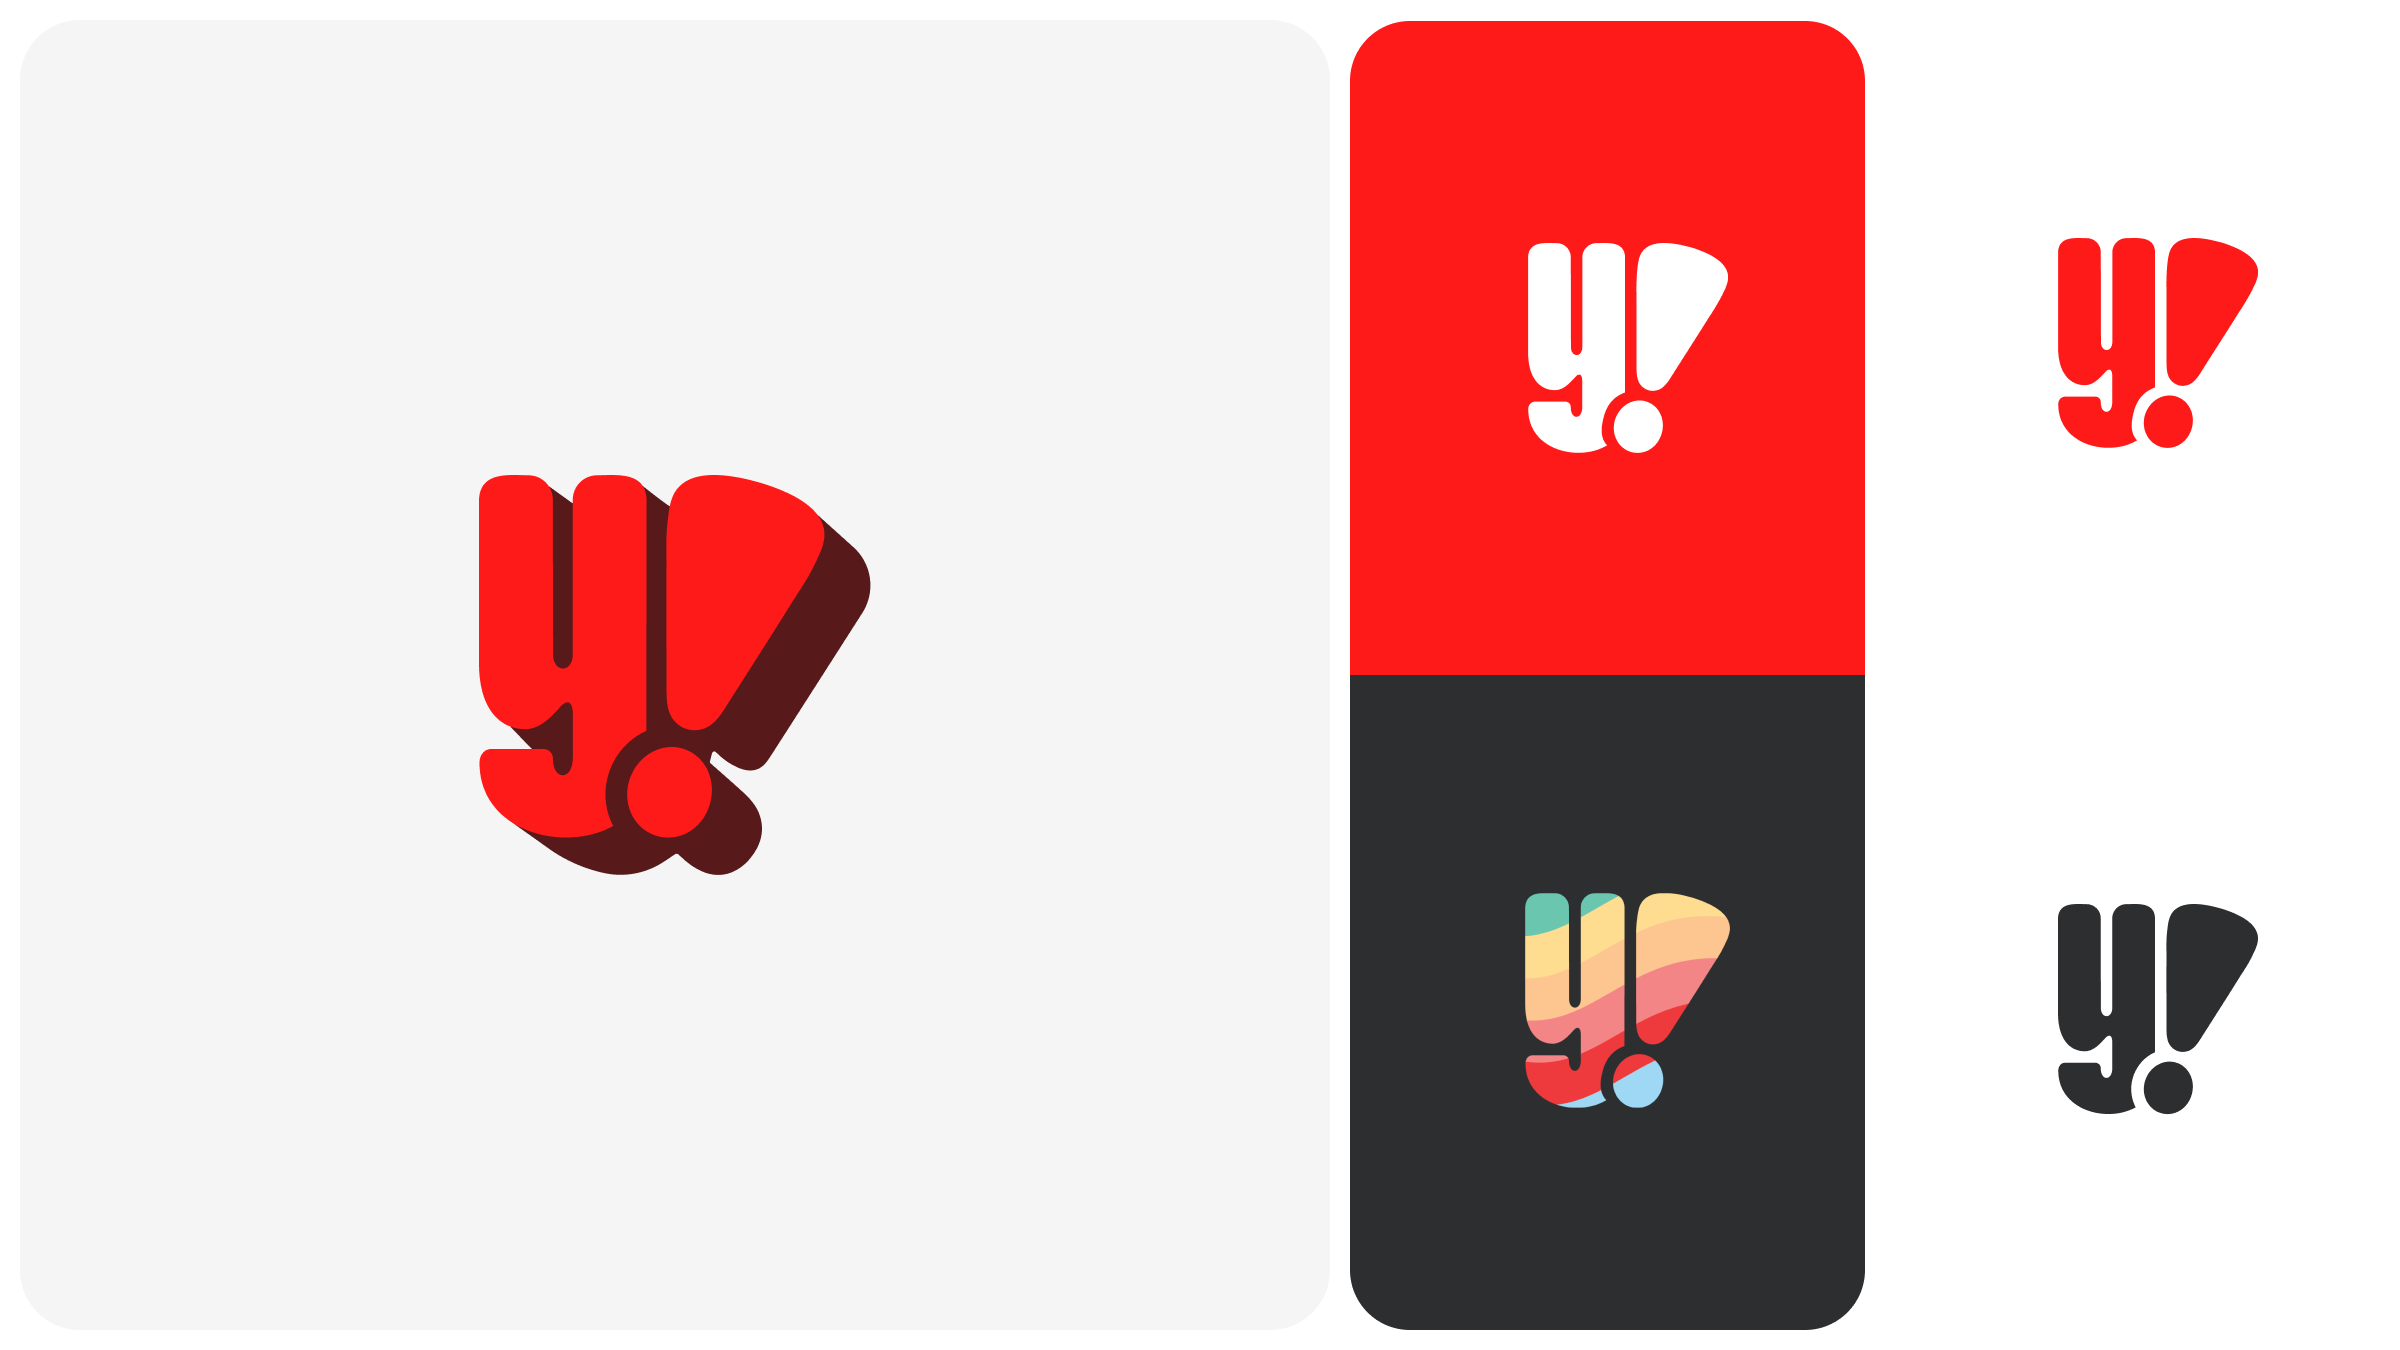 Y! Creative — Team Branding